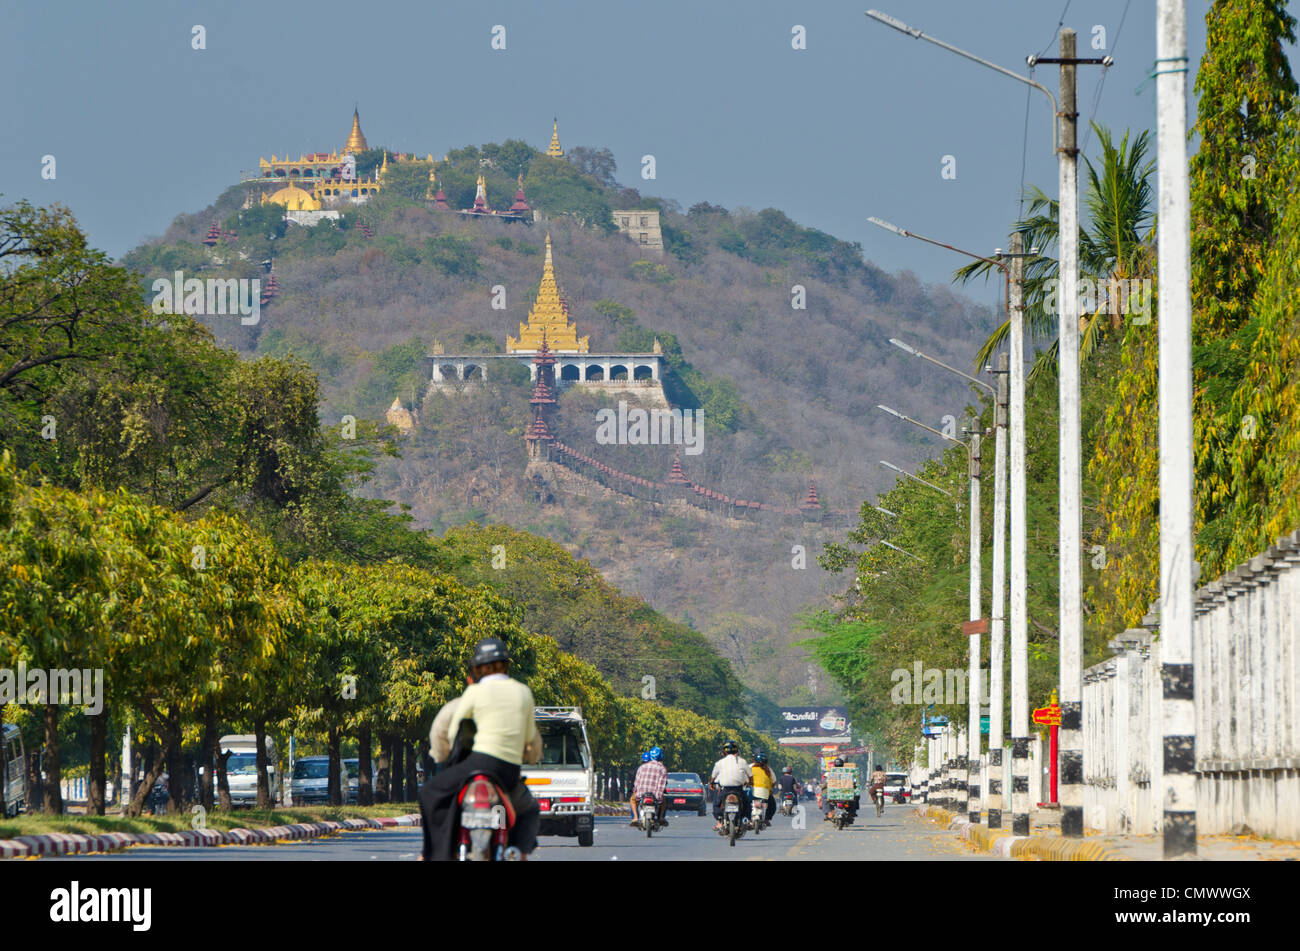 Scena di strada con Mandalay Hill in distanza, Mandalay Myanmar Foto Stock